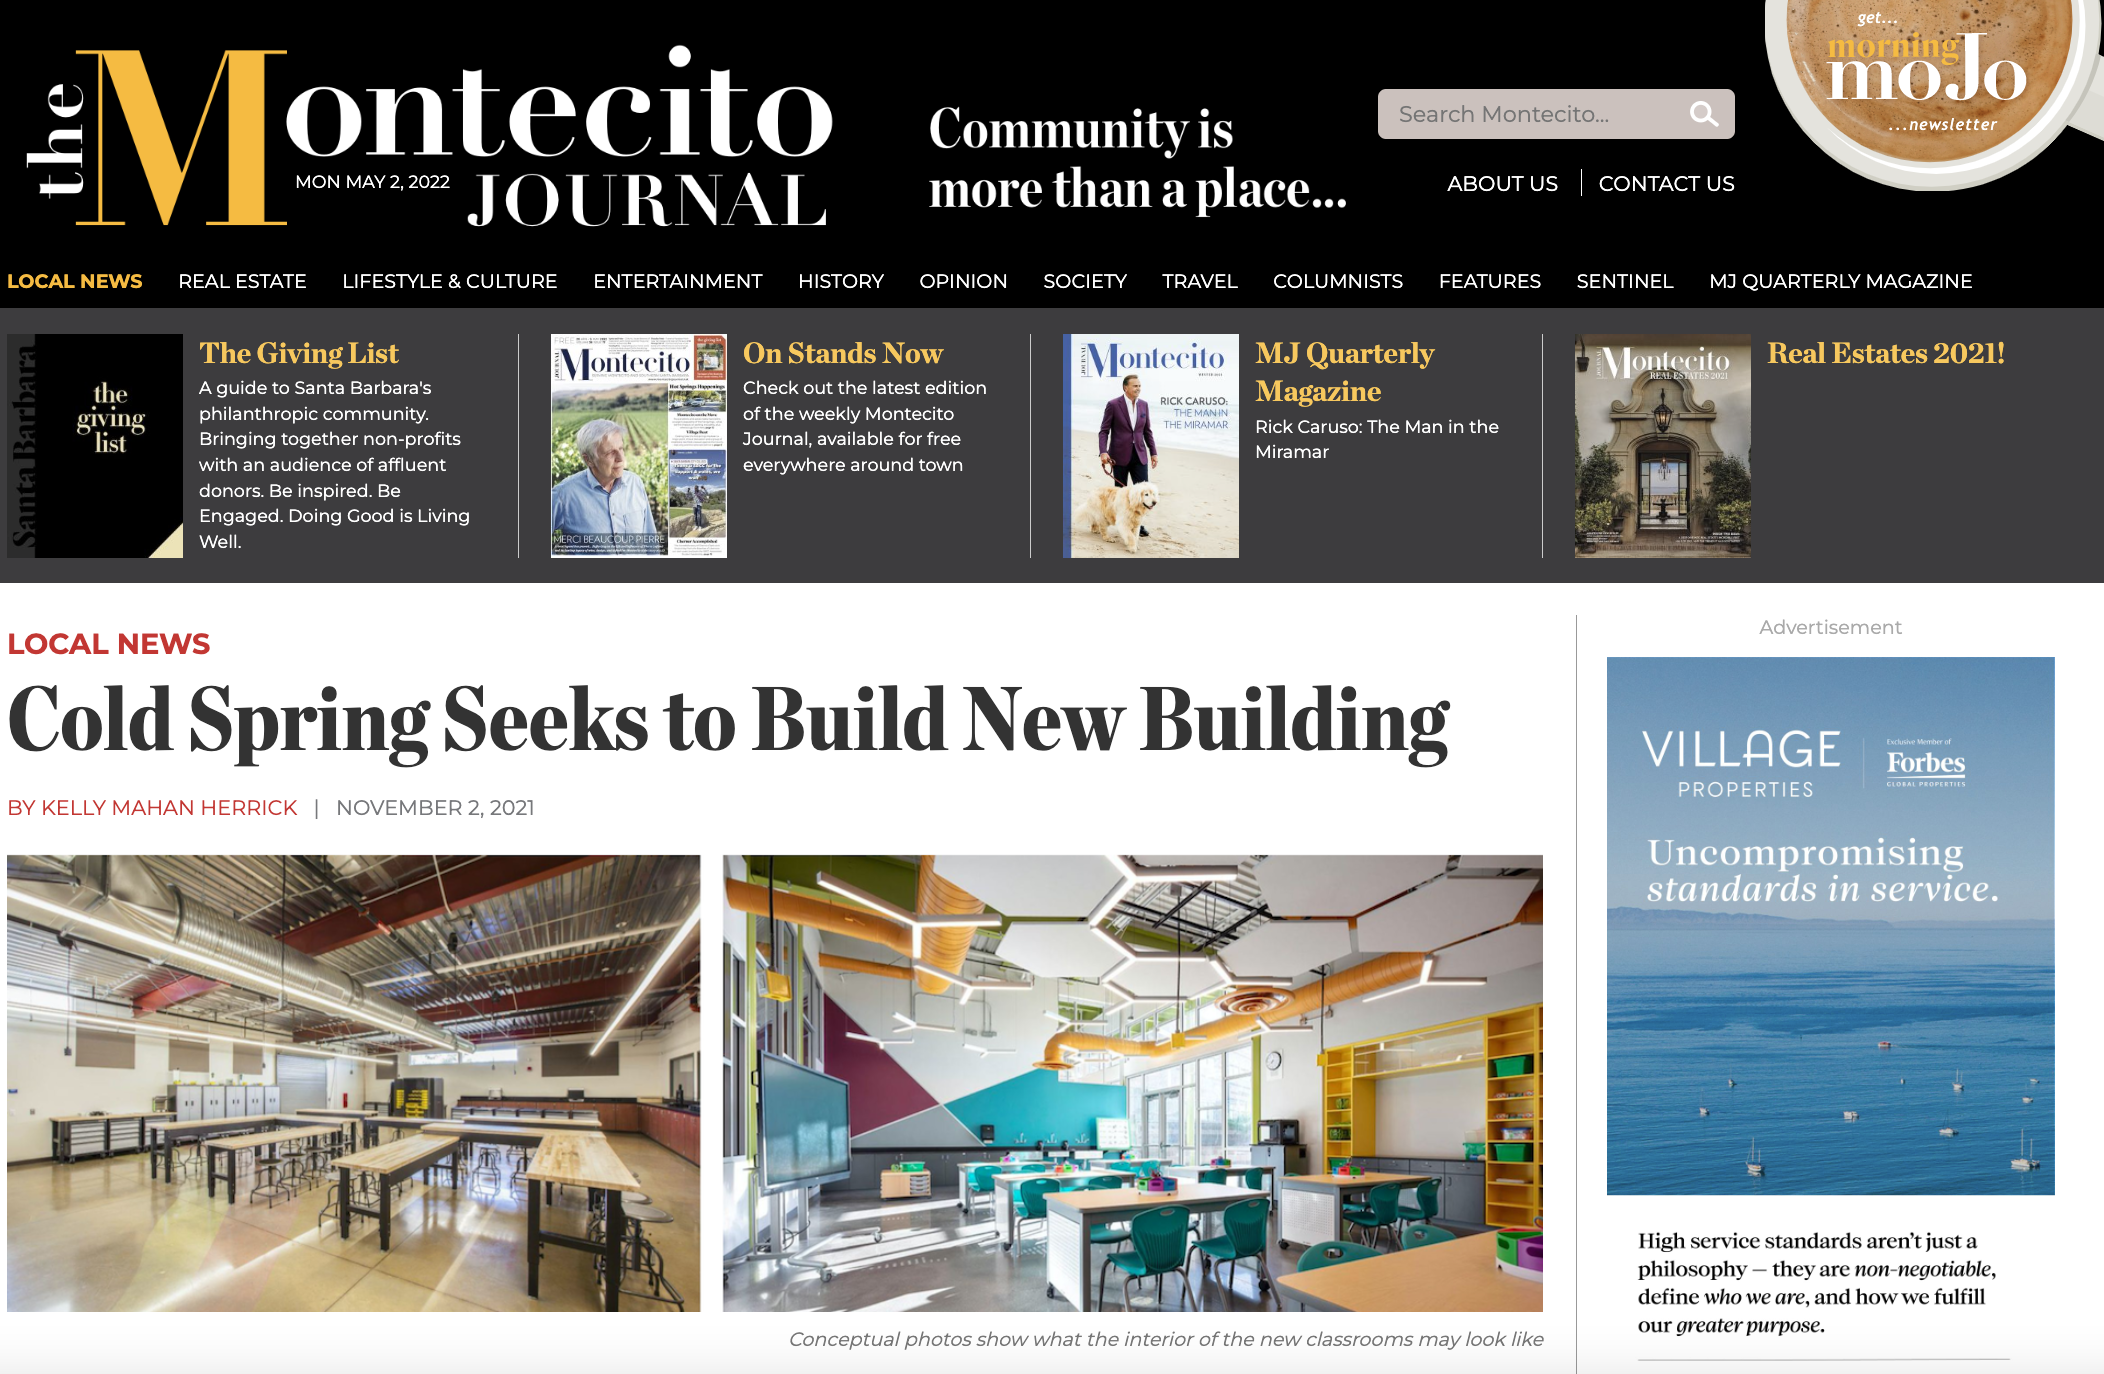 Montecito Journal Article regarding Building